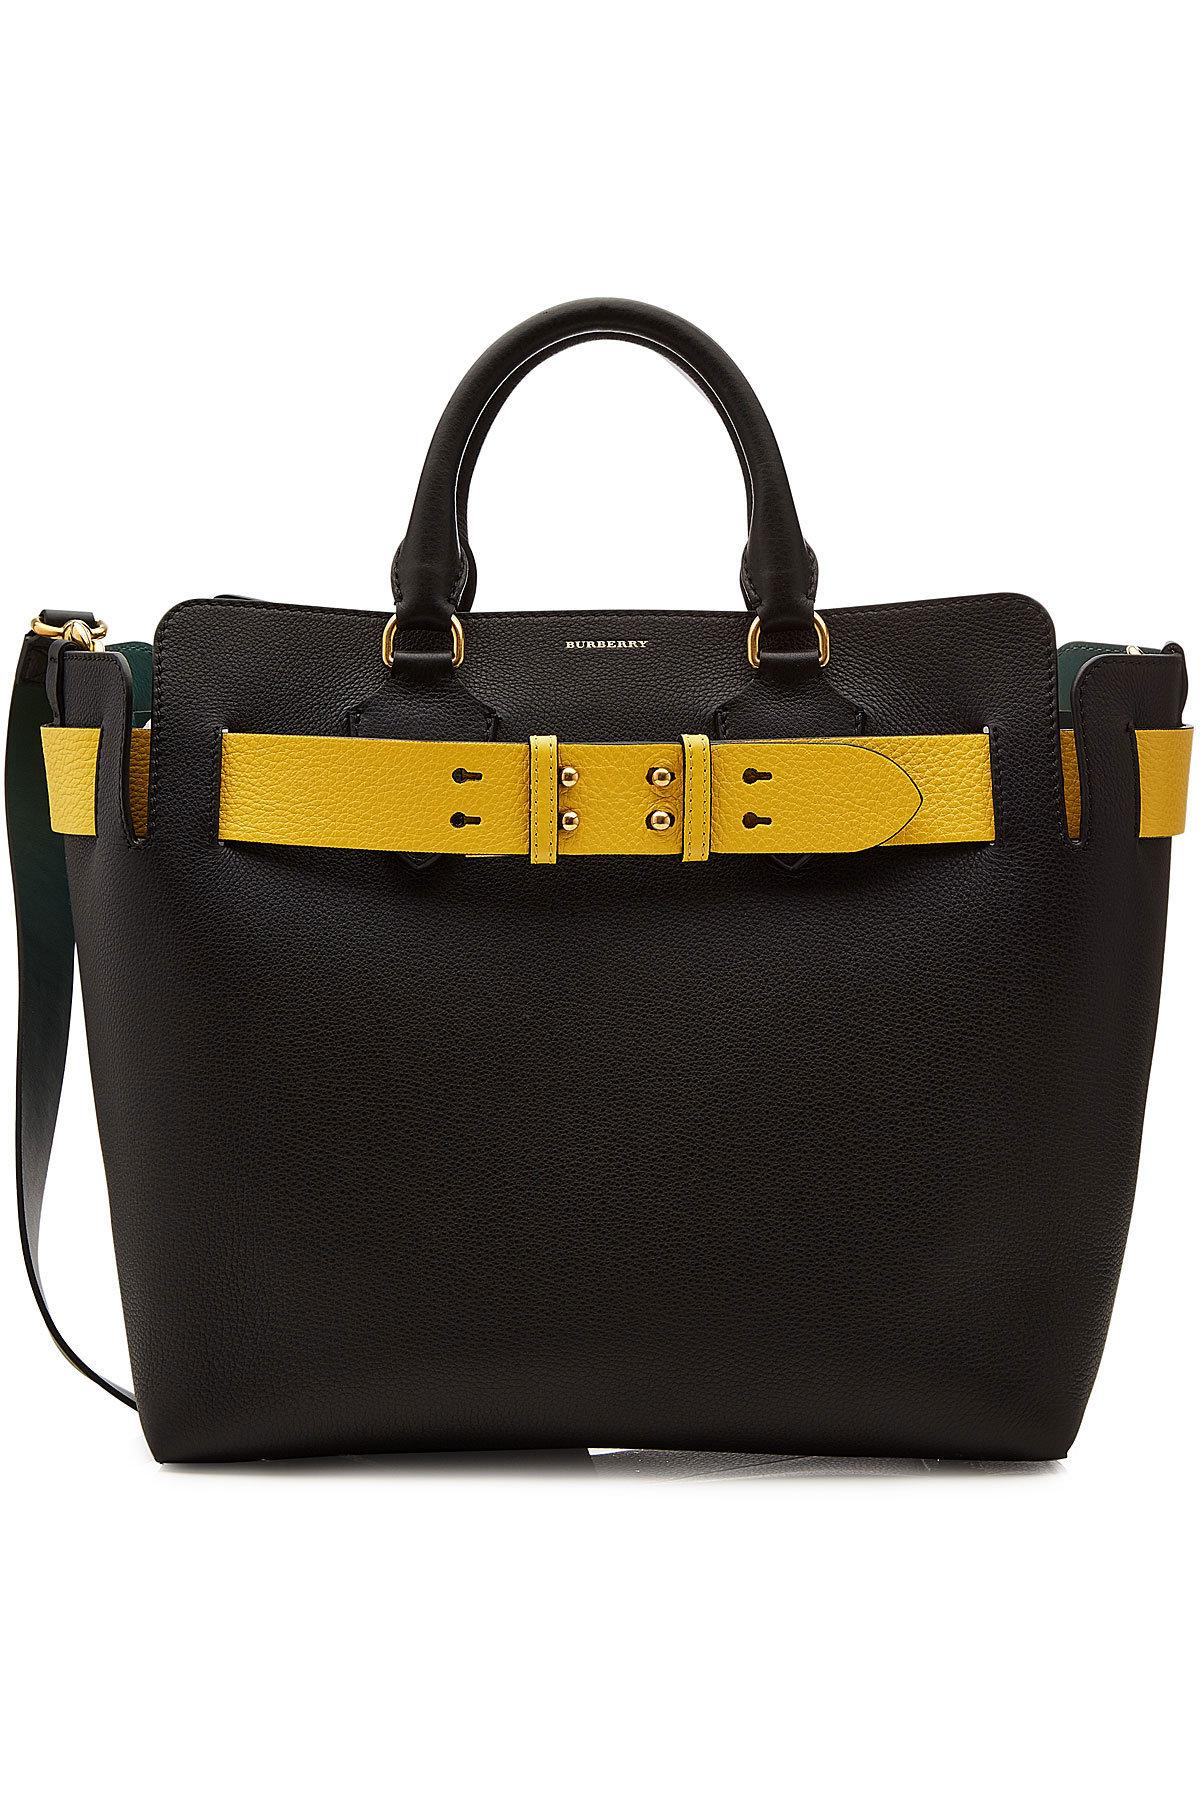 Burberry The Medium Leather Belt Bag In Black | ModeSens